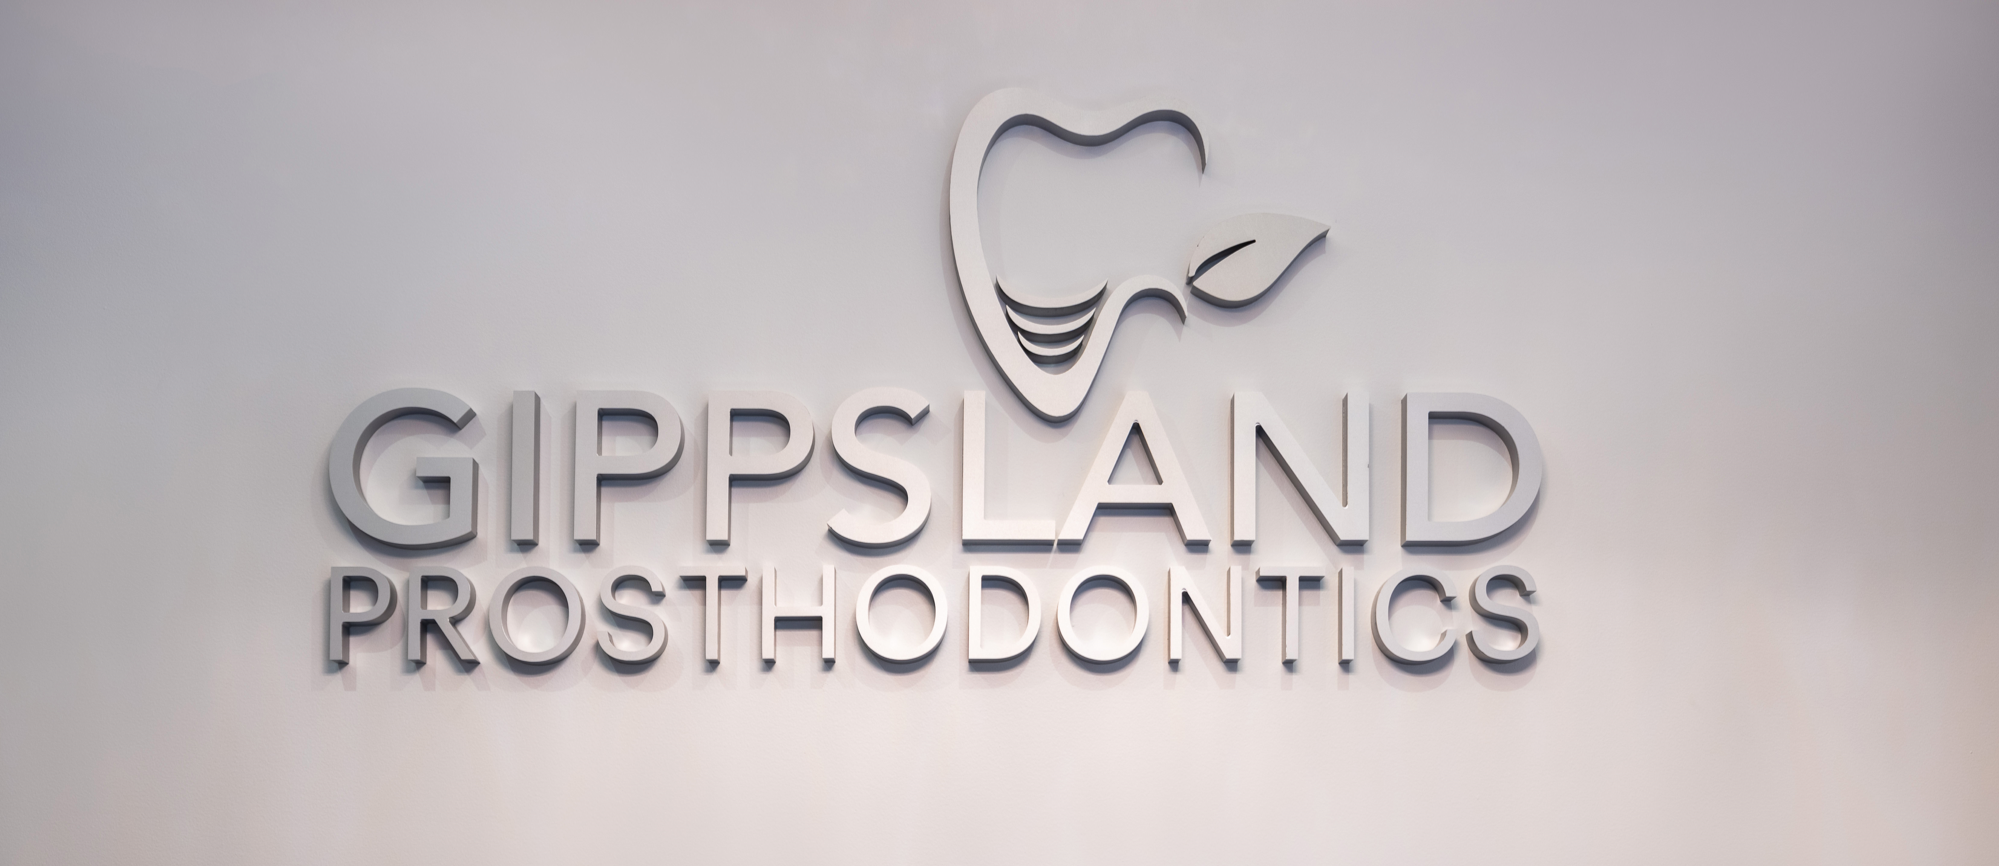 Gippsland prosthodontics